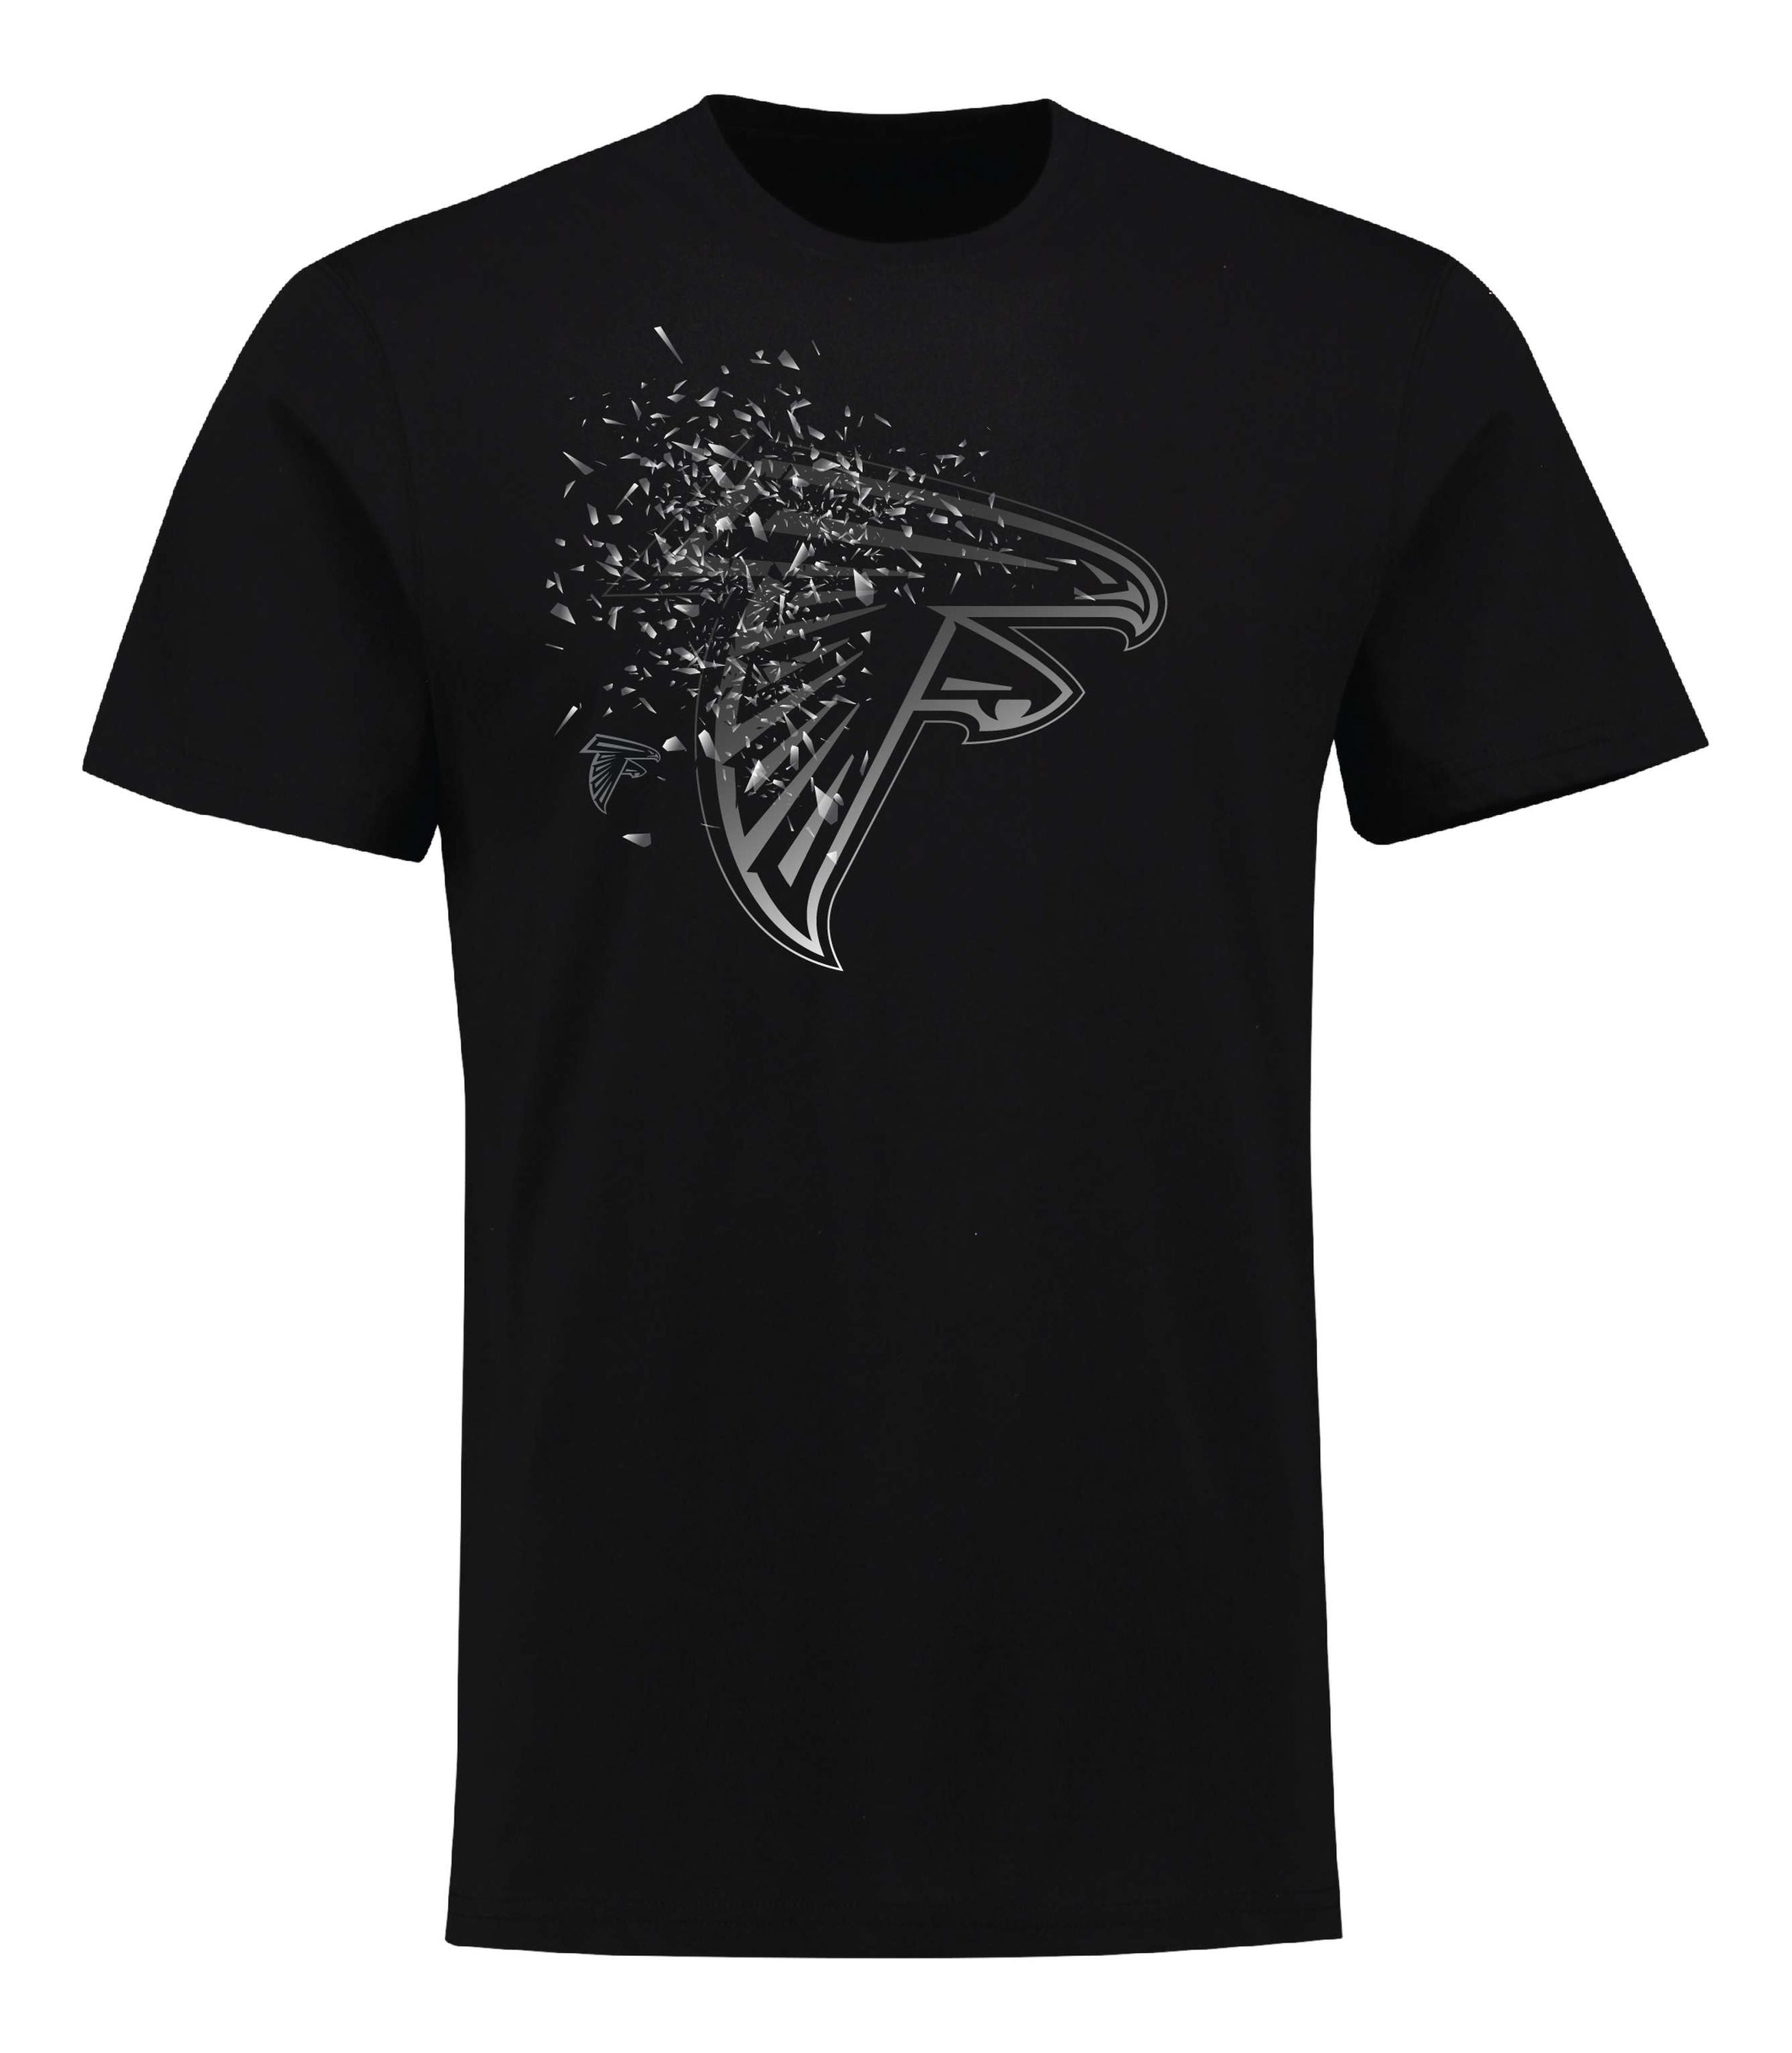 Fanatics - NFL Atlanta Falcons Shatter Graphic T-Shirt - Schwarz